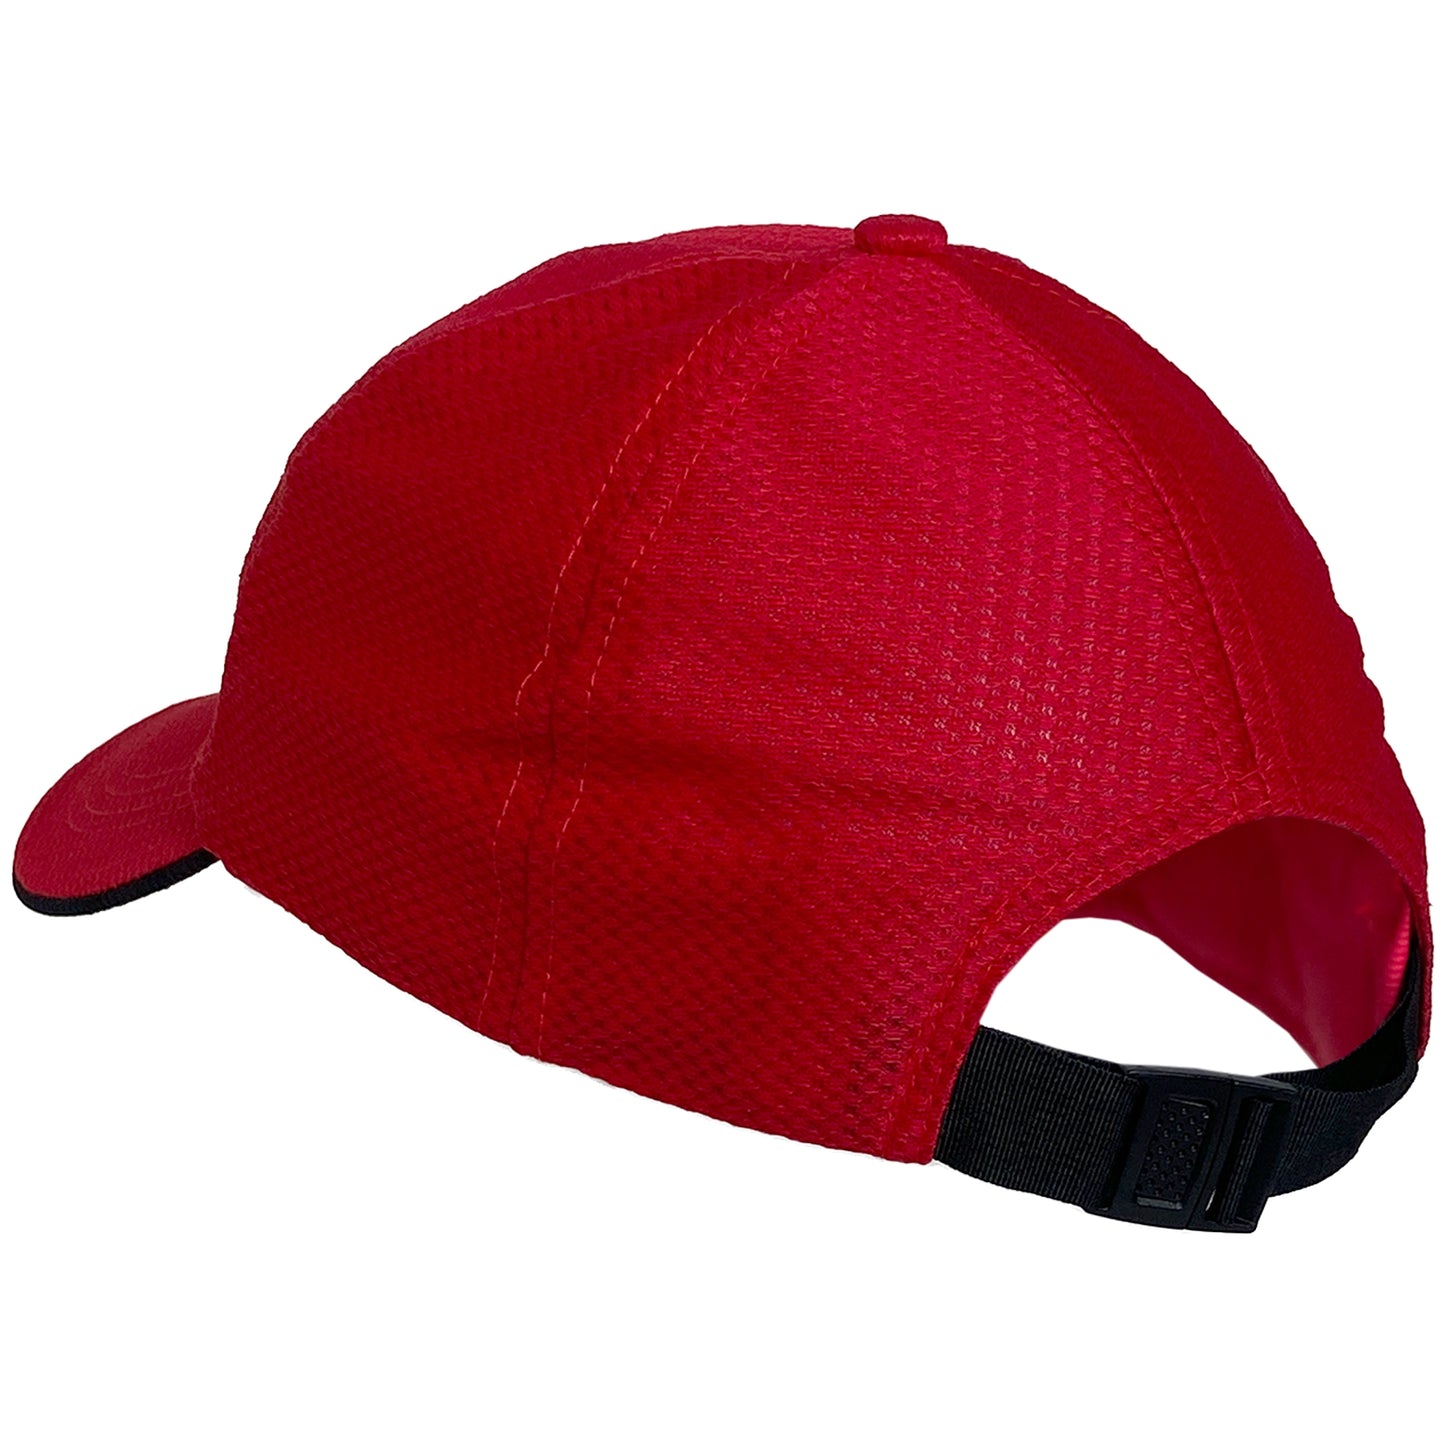 Yonex cap red W341